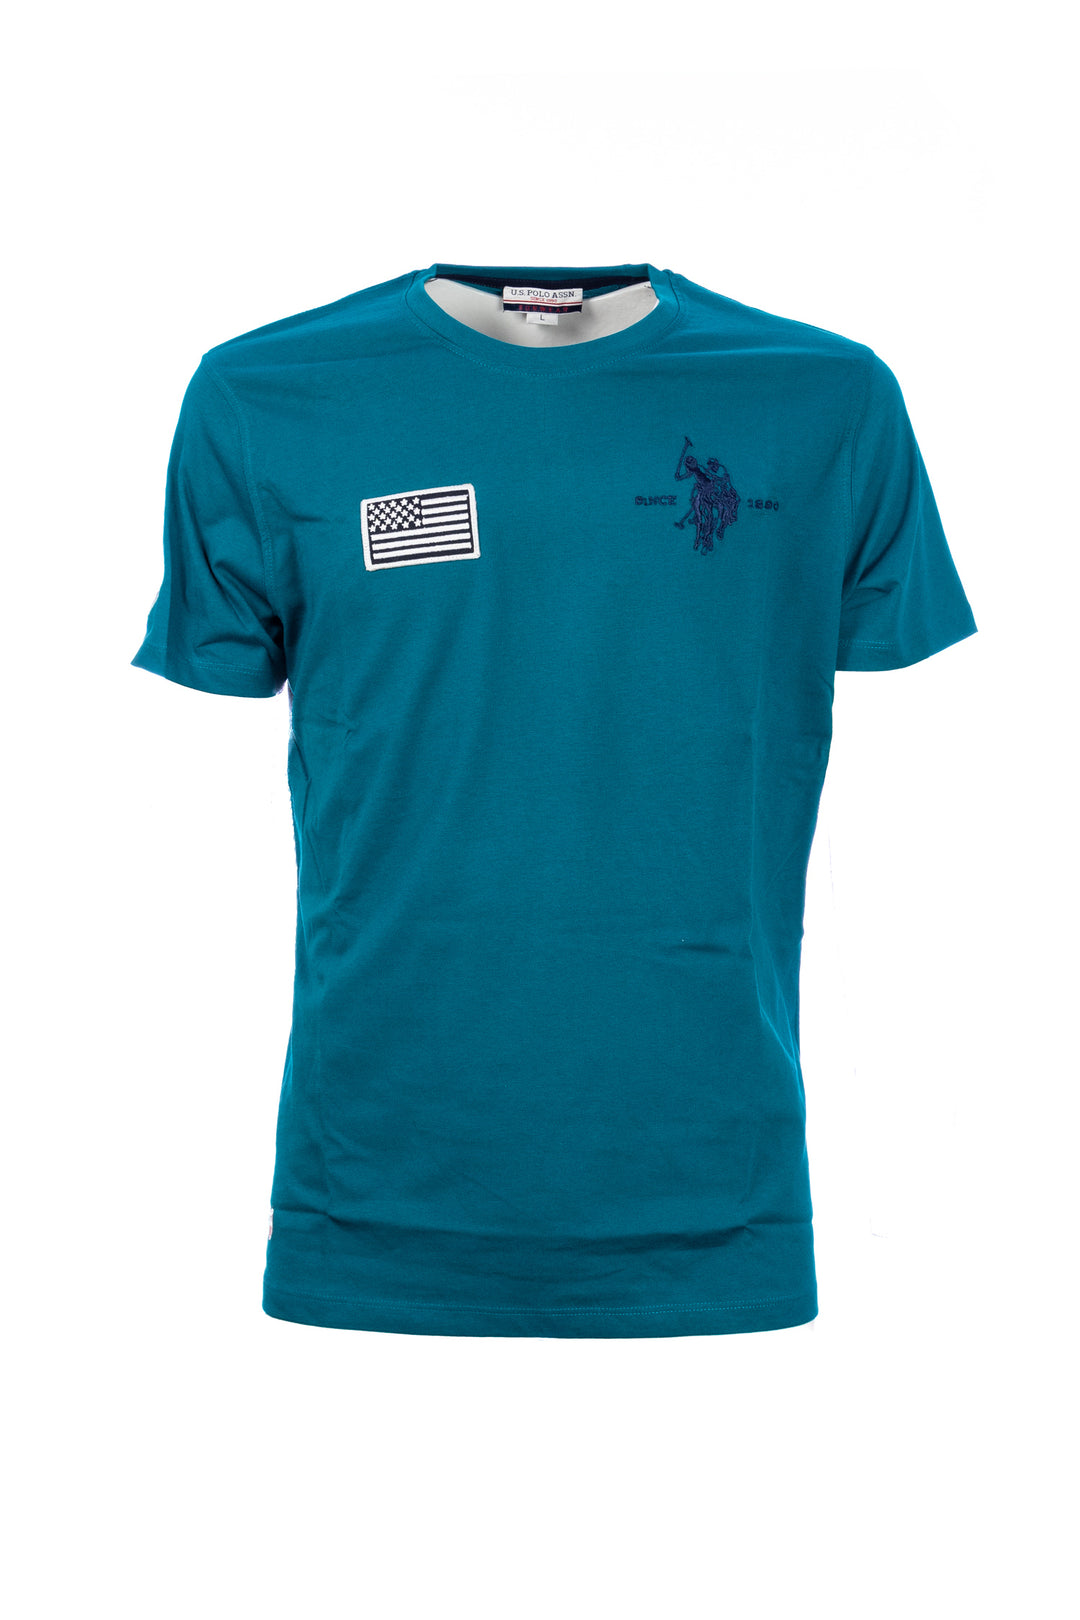 U.S. POLO ASSN. BEACHWEAR T-shirt ottanio in cotone con logo e bandiera USA ricamati - Mancinelli 1954